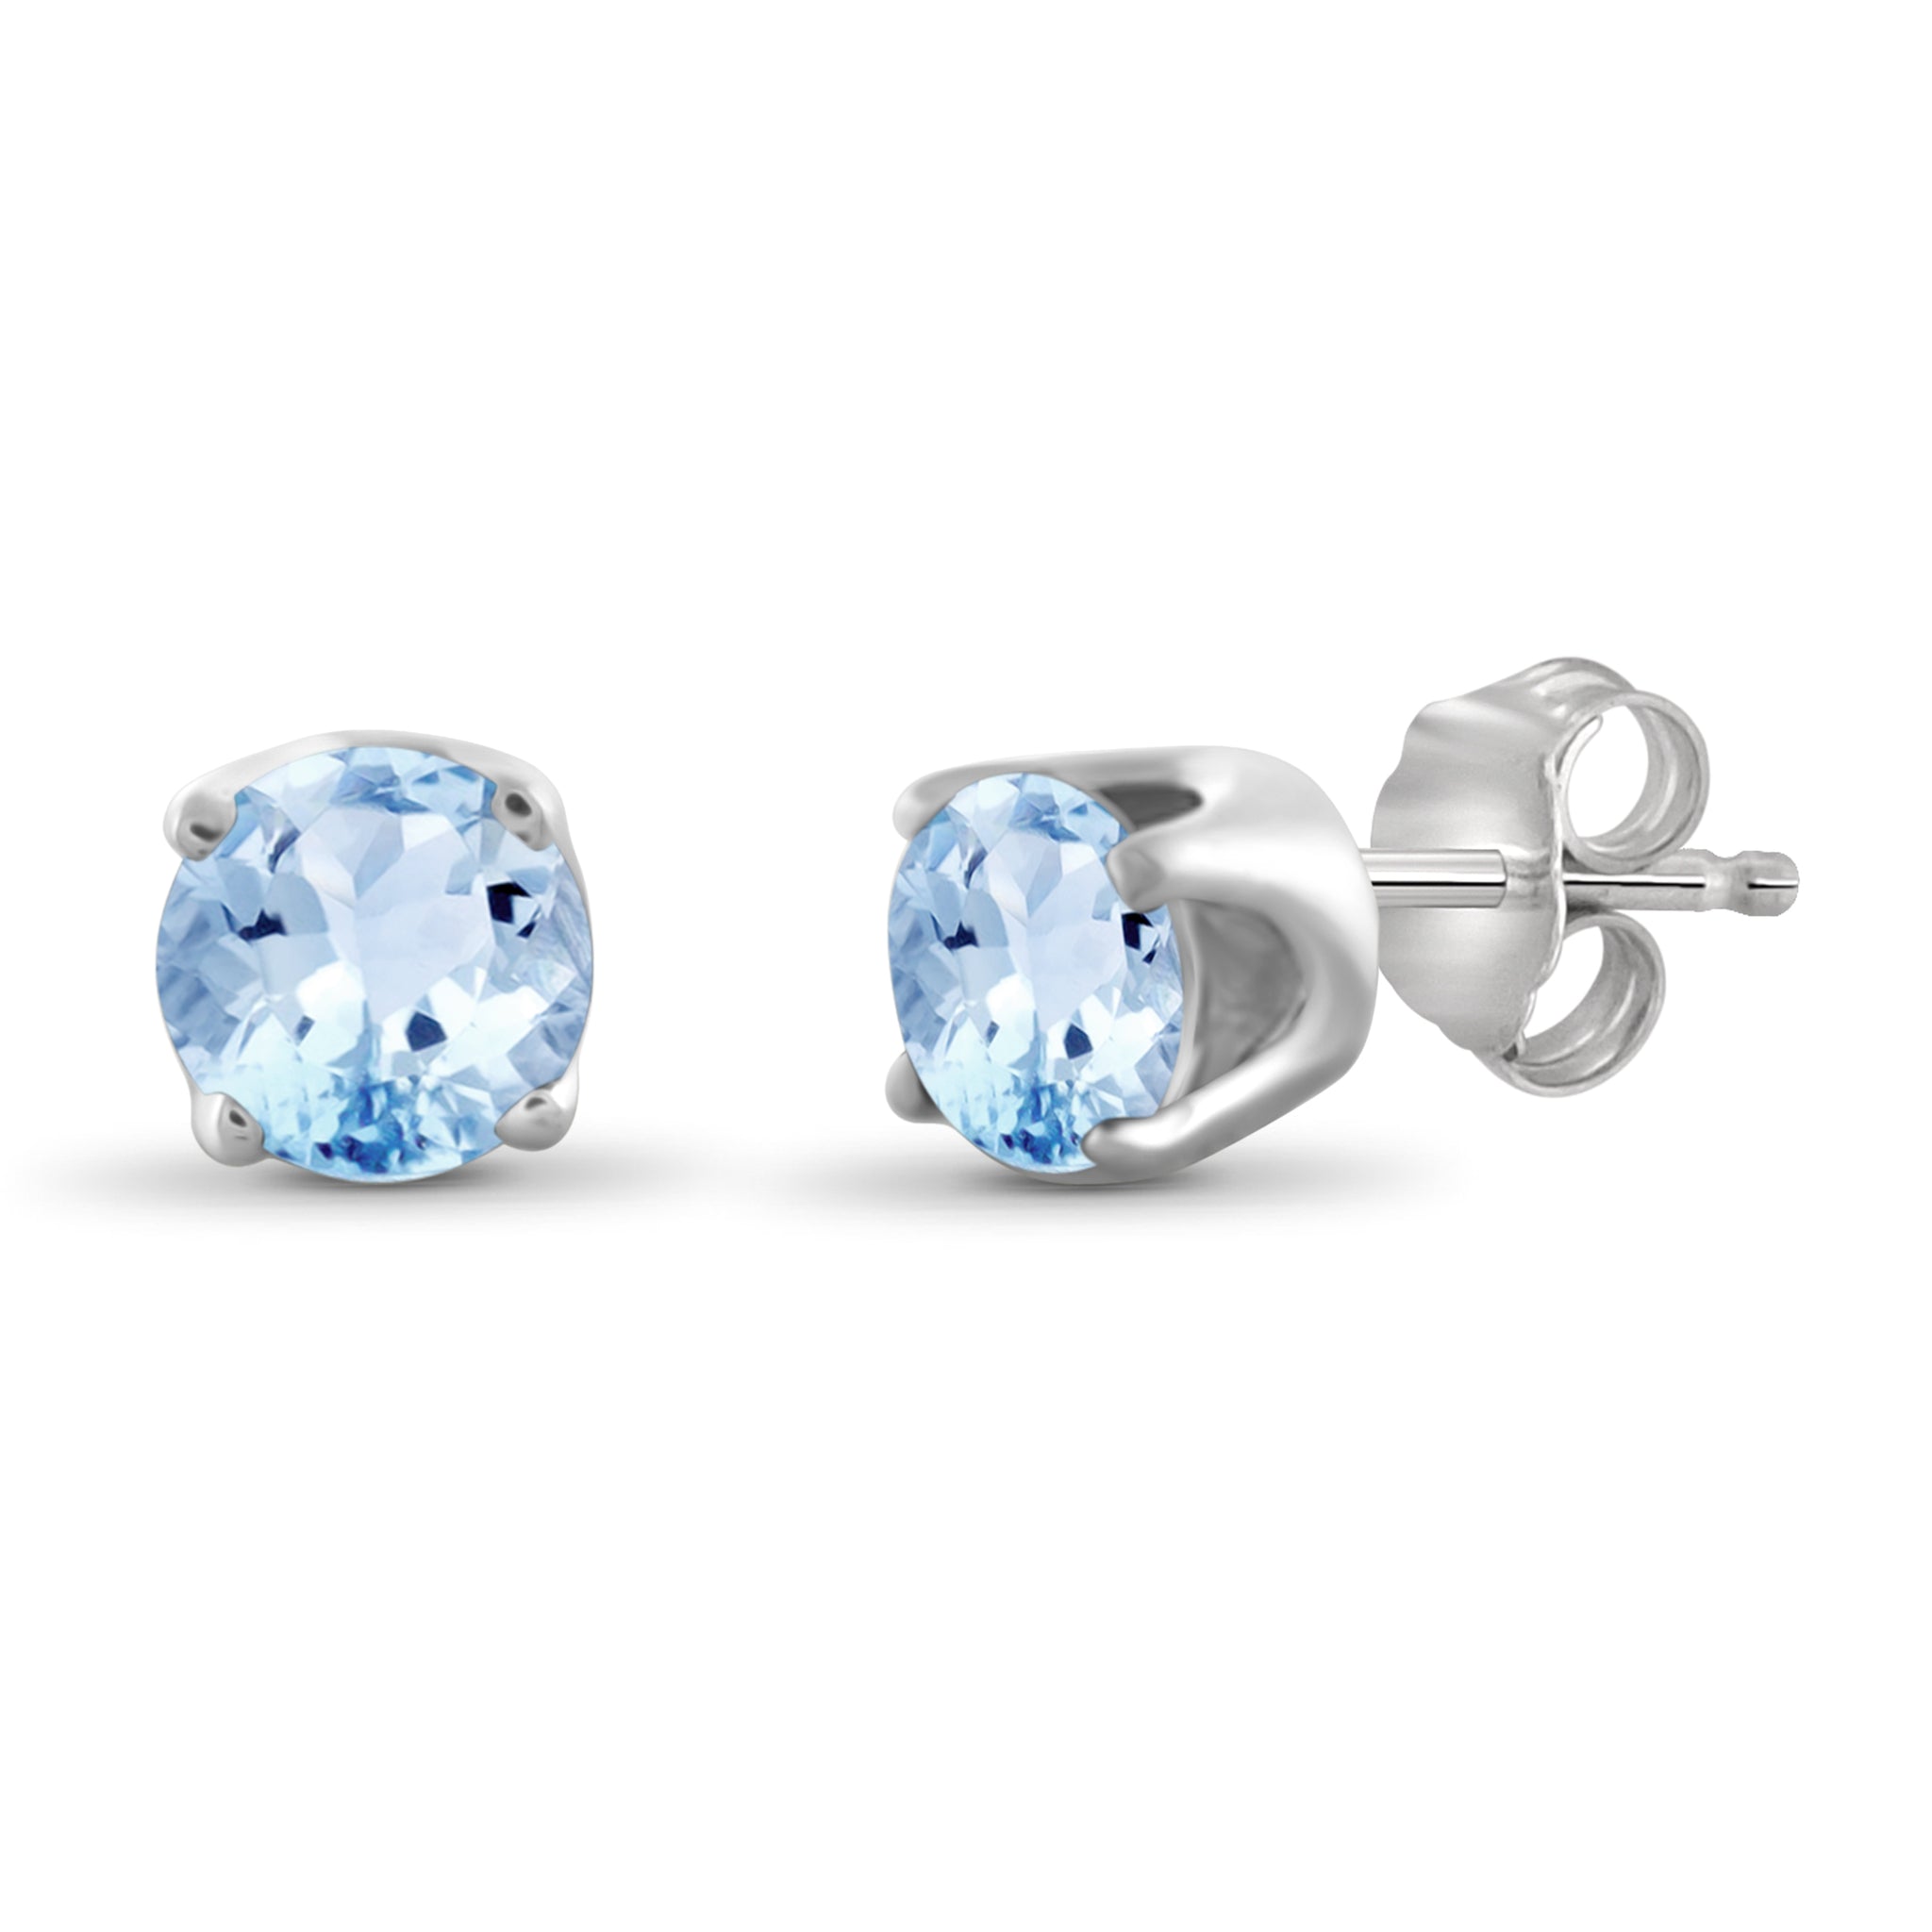 JewelonFire 1.20 Carat T.G.W. Sky Blue Topaz Sterling Silver Stud Earrings - Assorted Colors